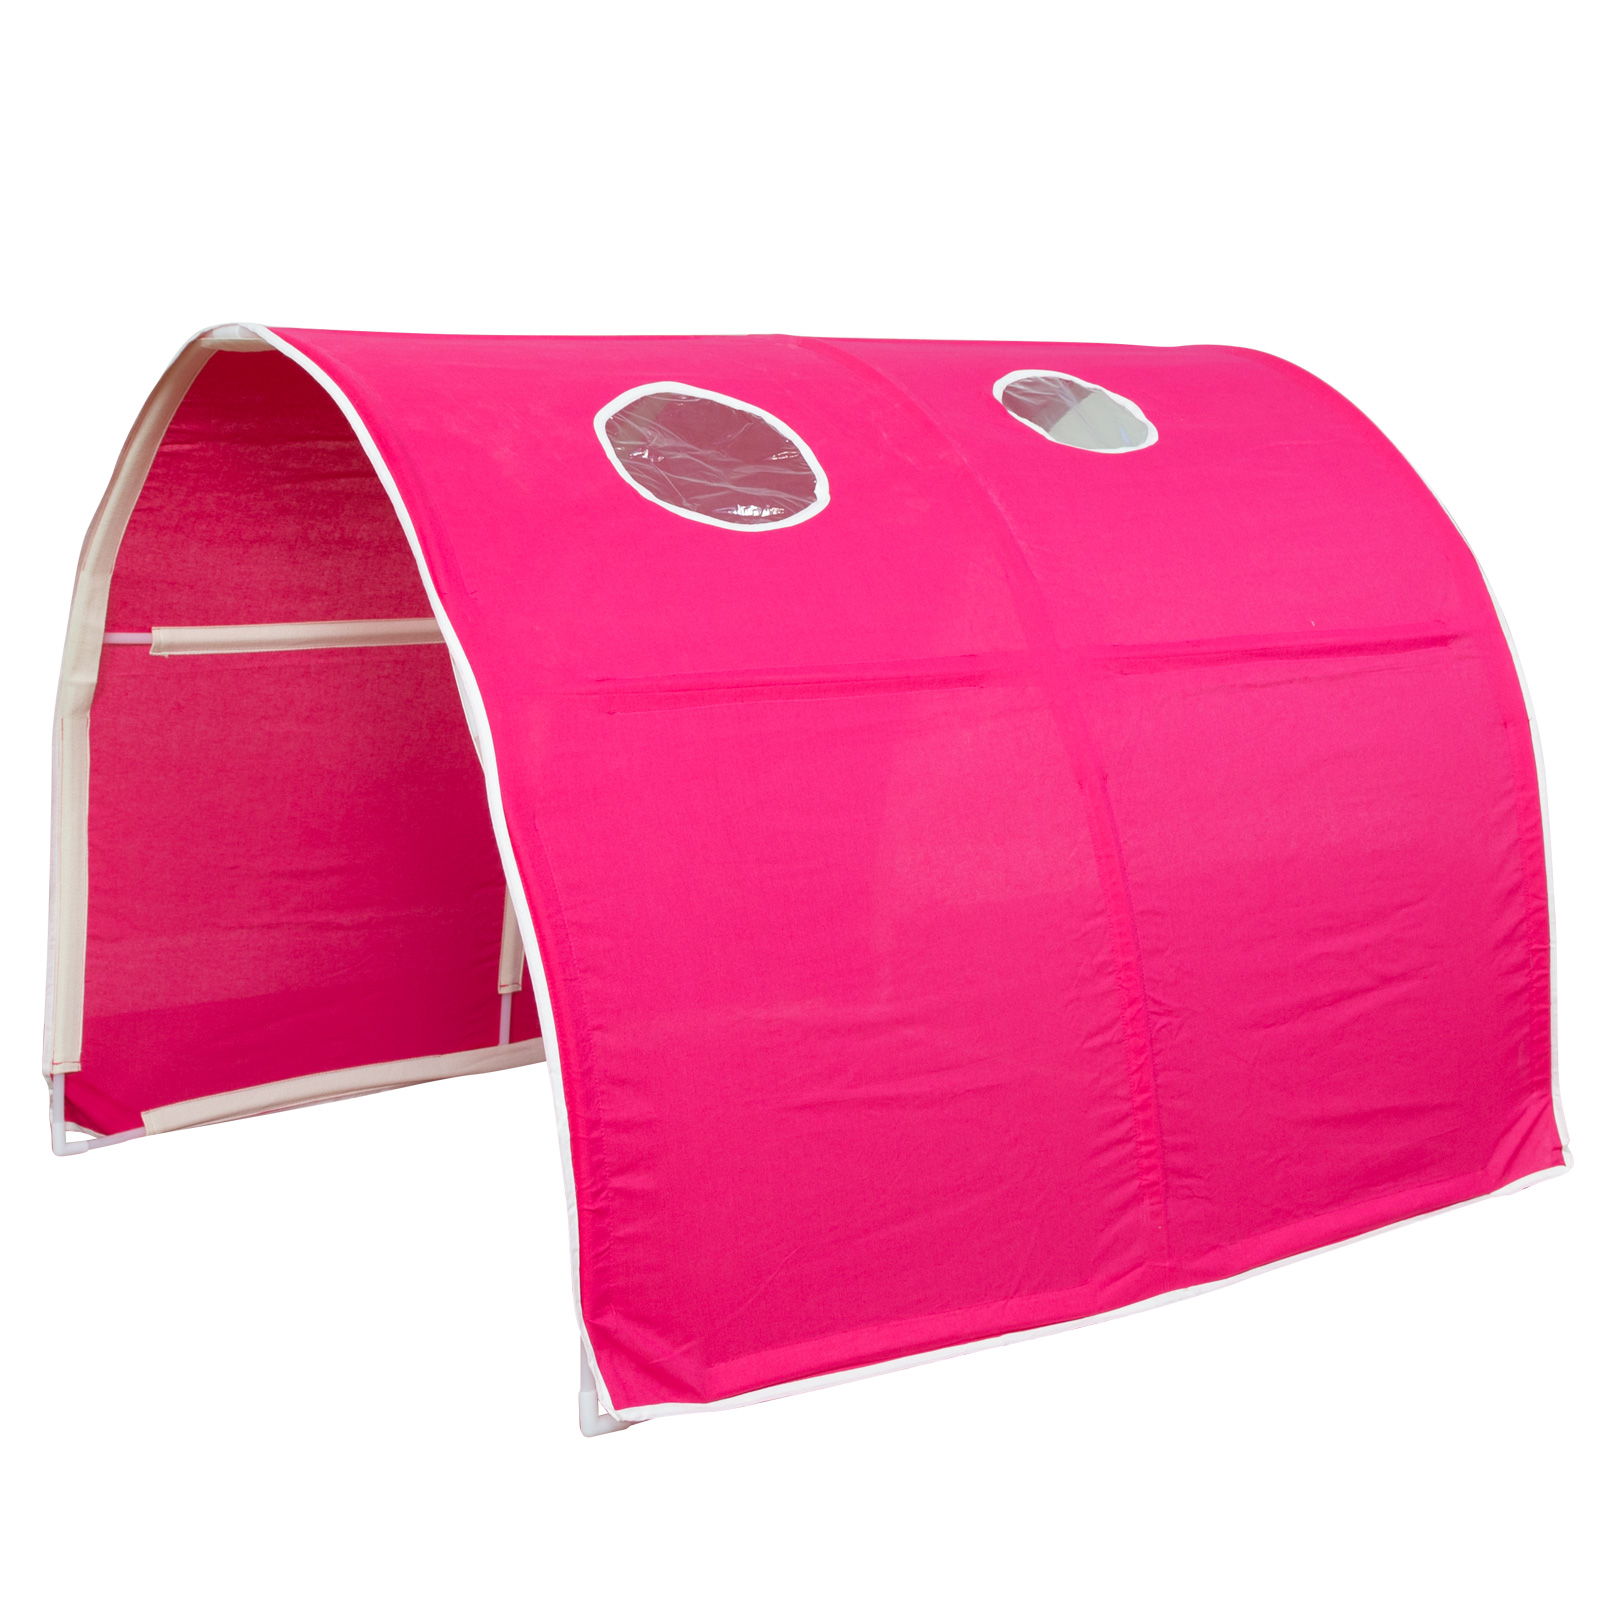 Hochbett mit Lattenrost 90x200 Rutsche Stockbett Kinderbett Holz Kiefer Vorhang Tunnel pink Spielbett